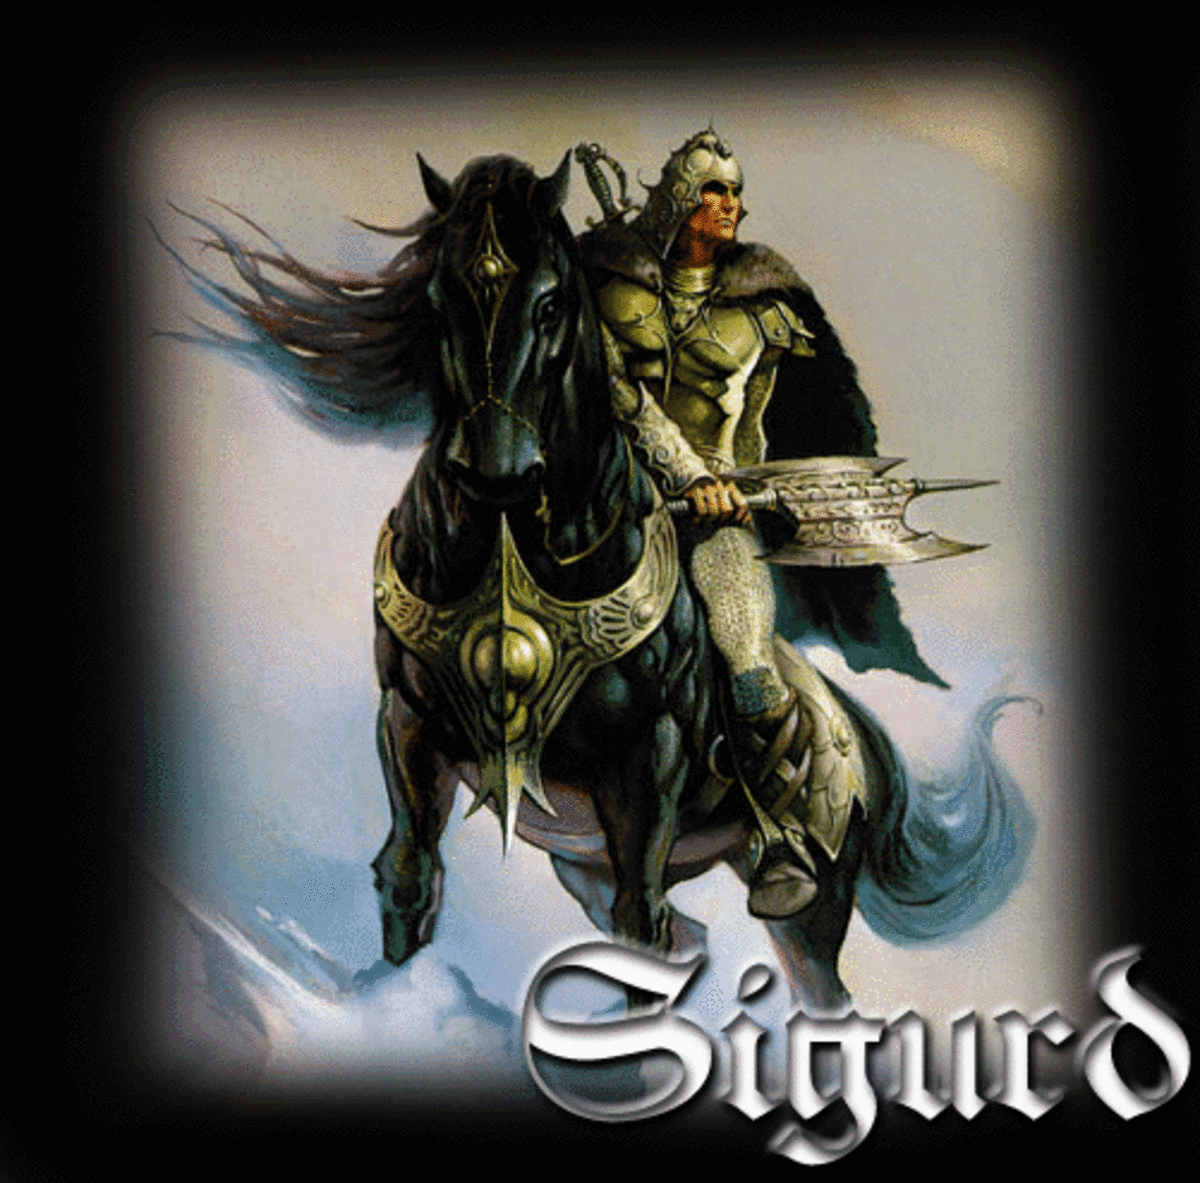 Sigurd, Nordic hero